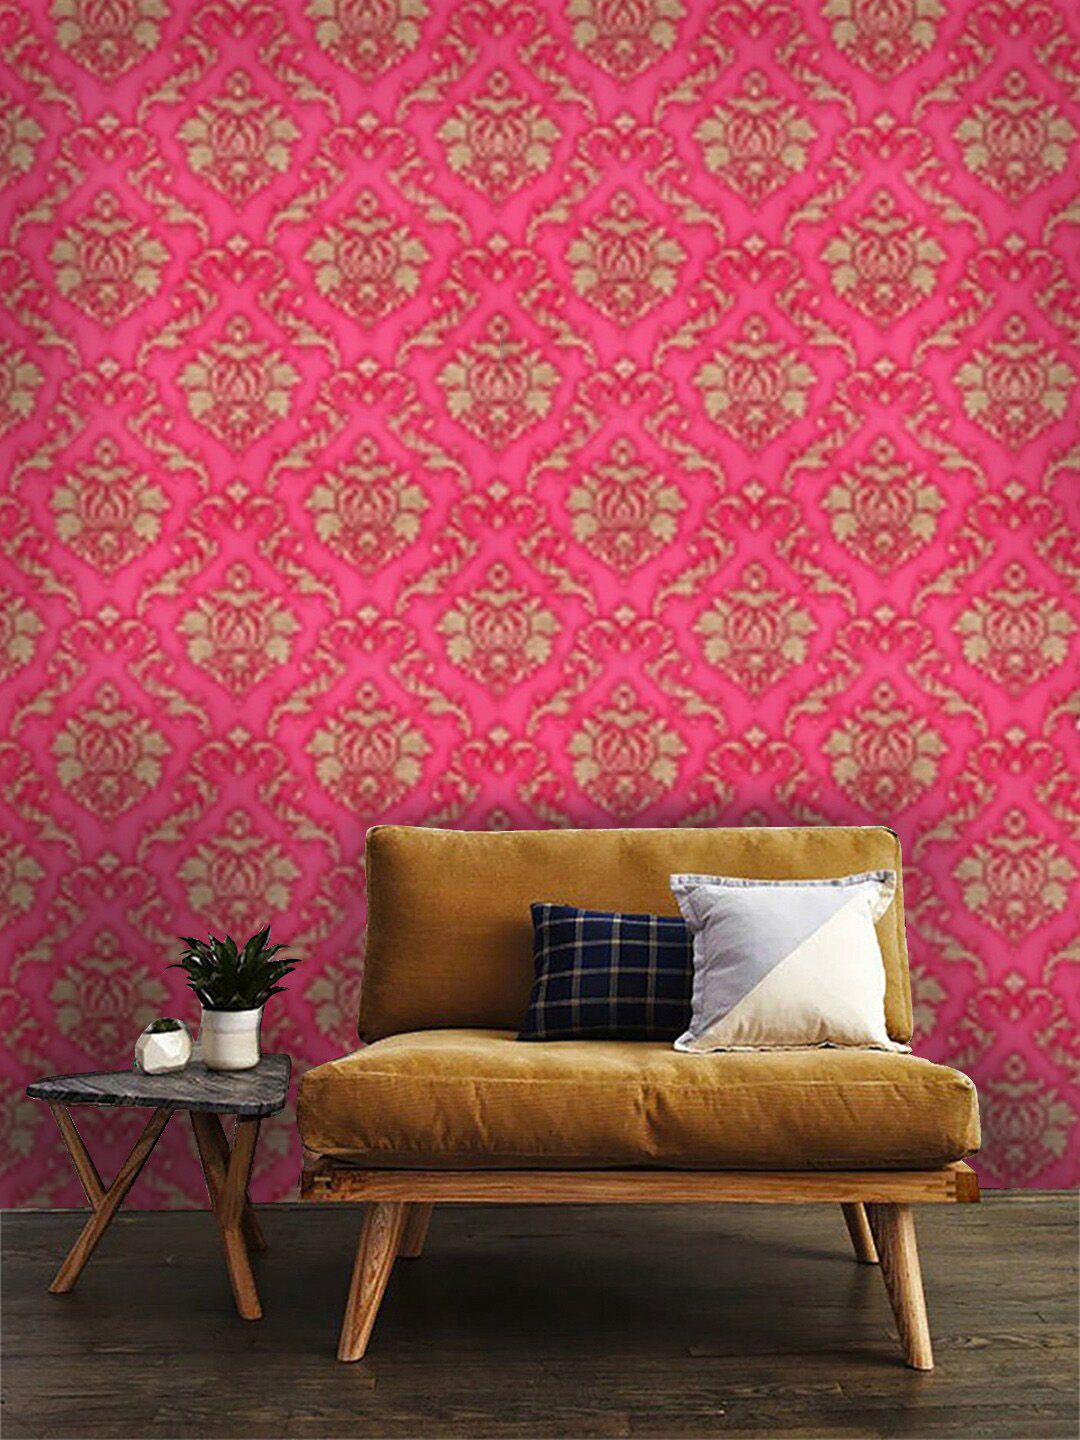 Jaamso Royals Pink Self-adhesive & Waterproof Damask Wallpaper Price in India